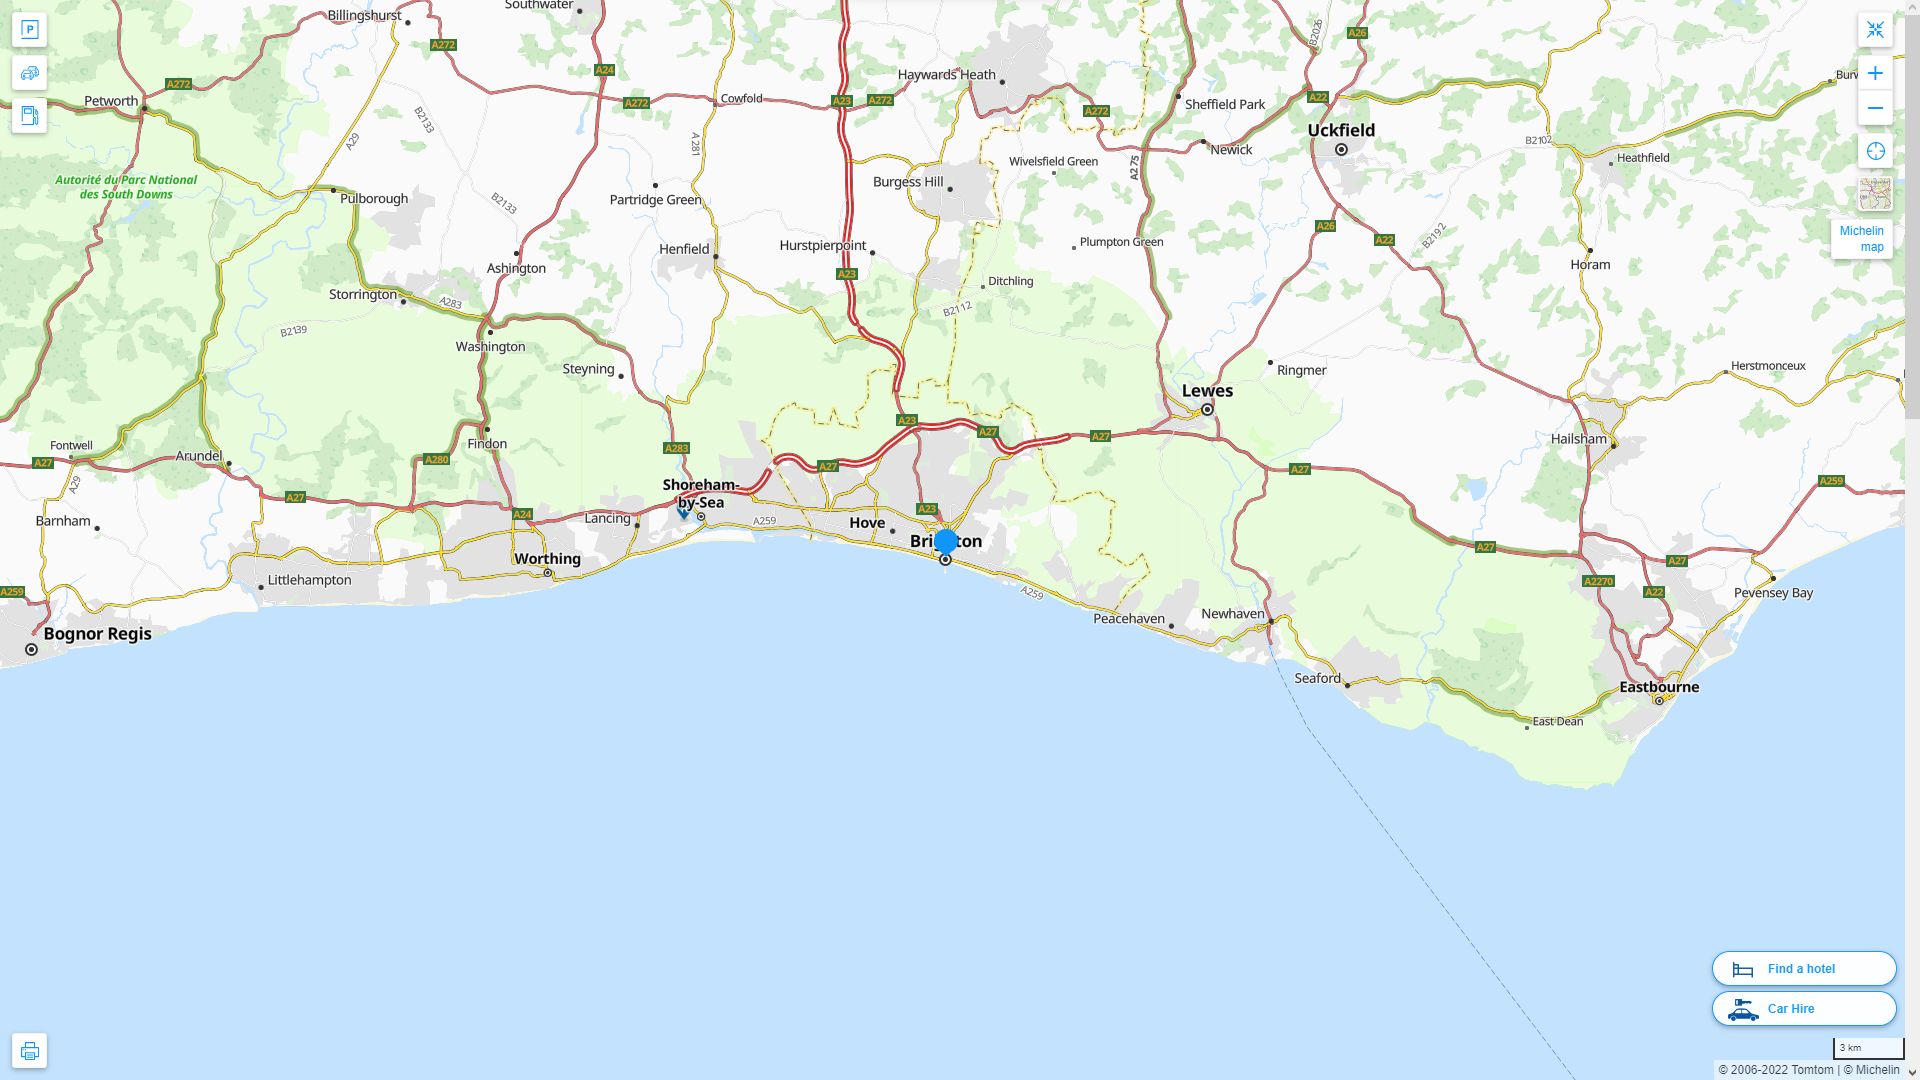 Brighton Royaume Uni Autoroute et carte routiere